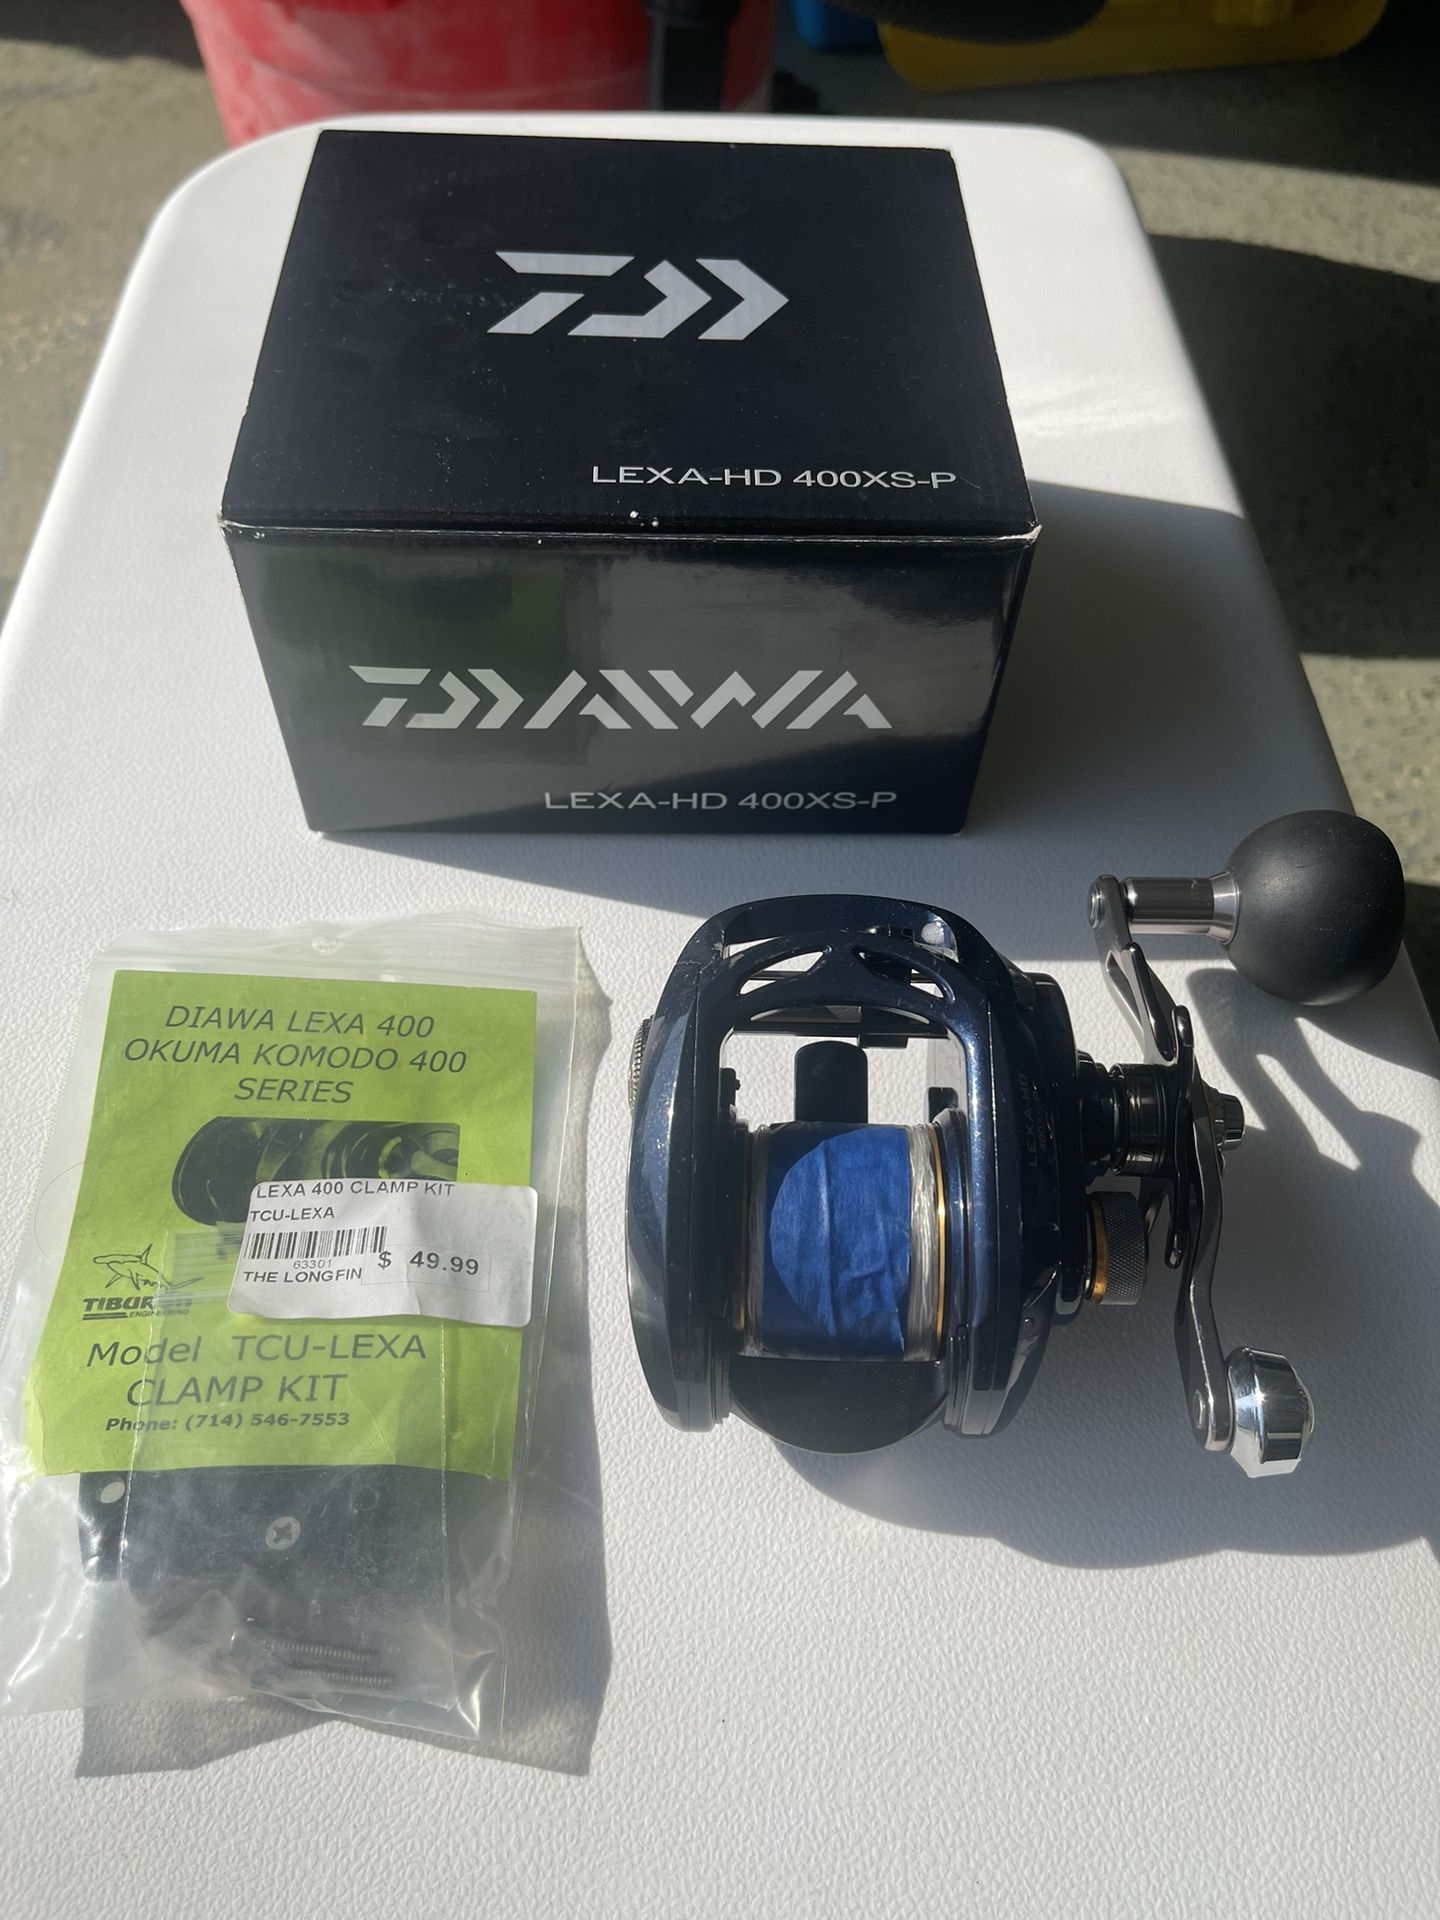 Daiwa Lexa 400HD with clamp